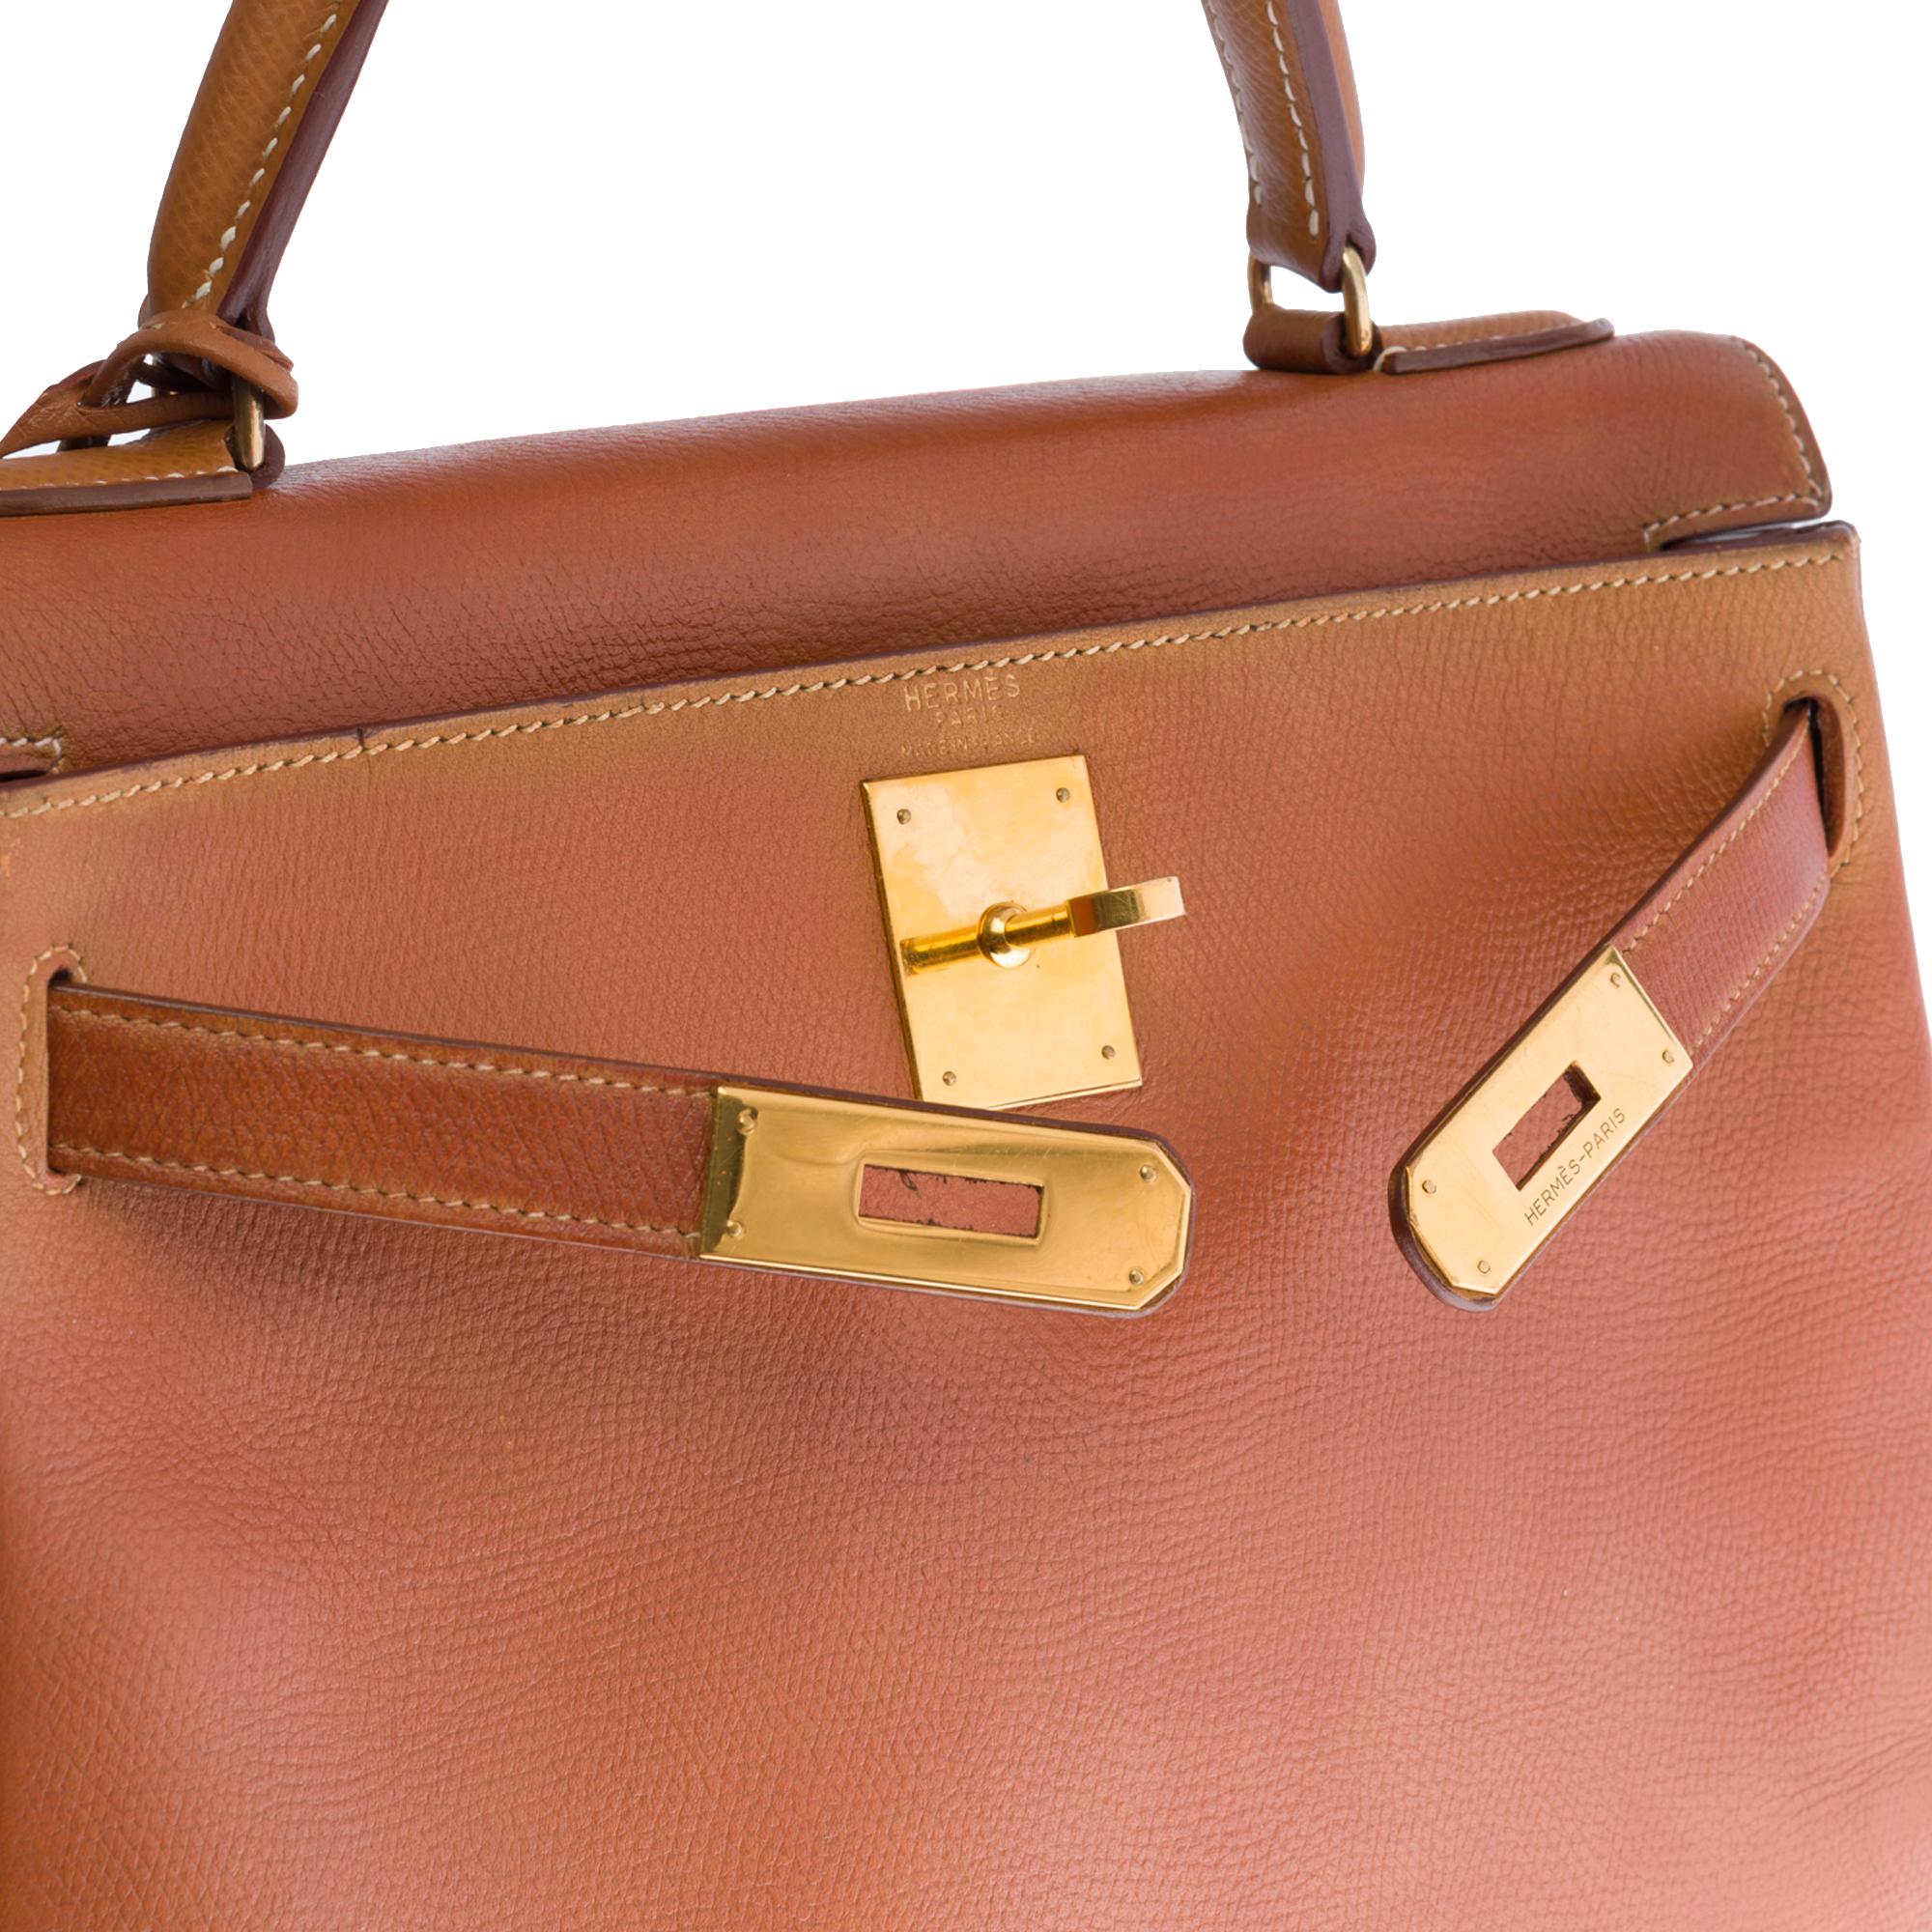 Women's Hermès Kelly 28cm retourné handbag with strap in Gold Courchevel leather, GHW